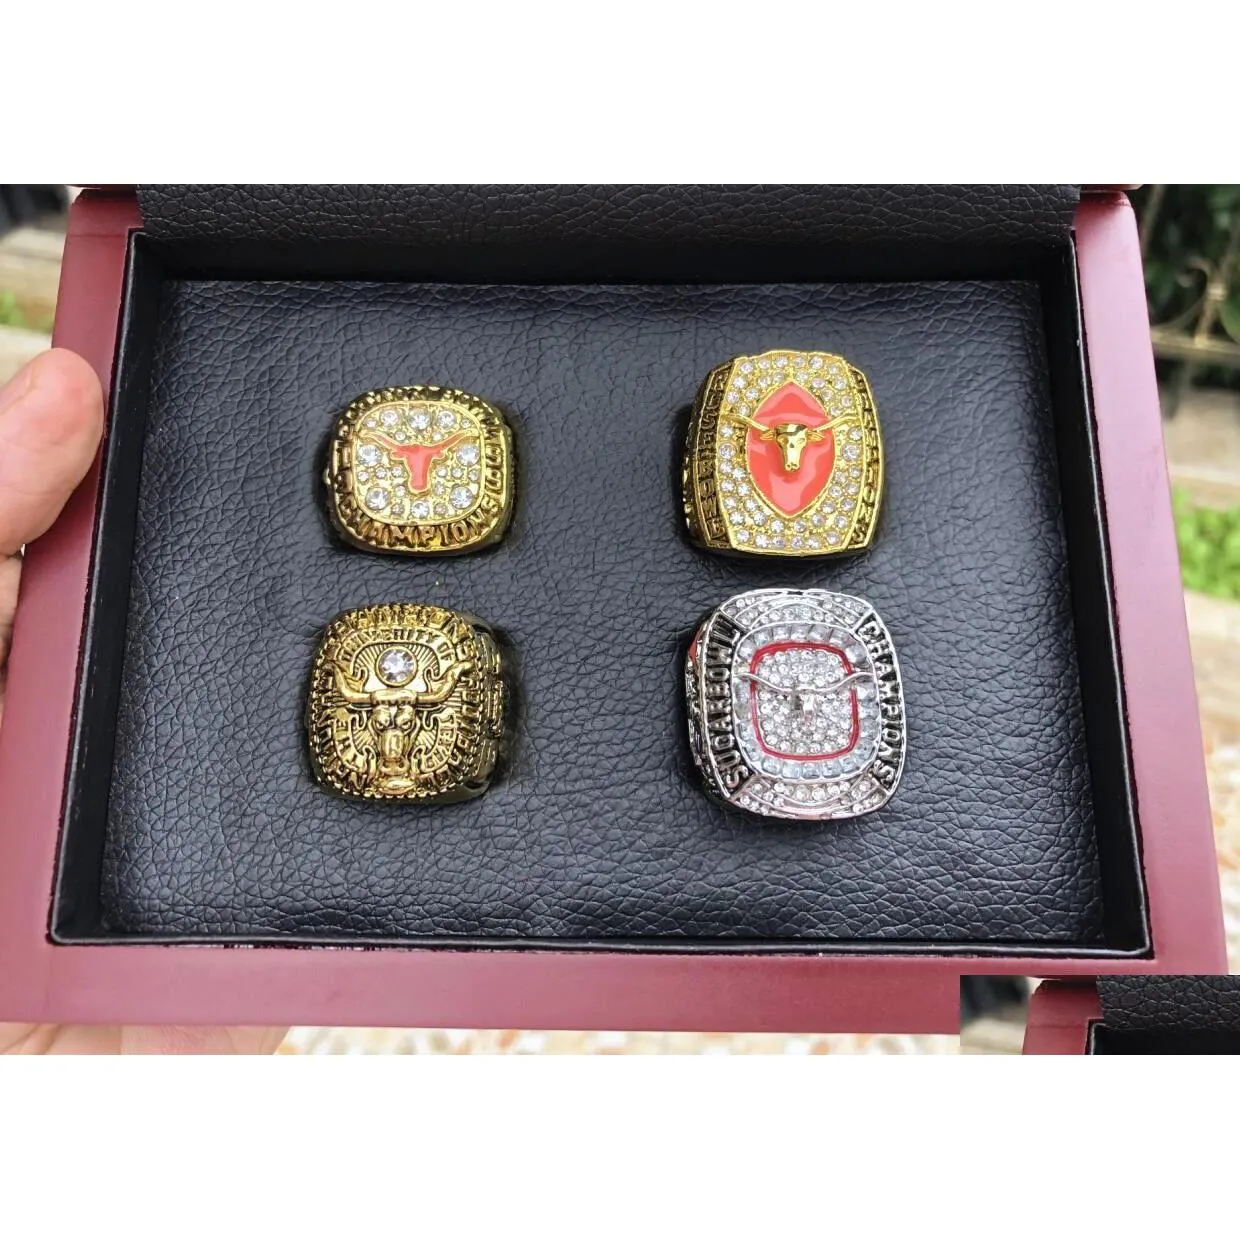 4 stuks Texas Longhorn Rose Bowl Sec Team Champions Championship Ring met houten kist Mannen Fan Gift Groothandel Drop Delivery Dh6Fy